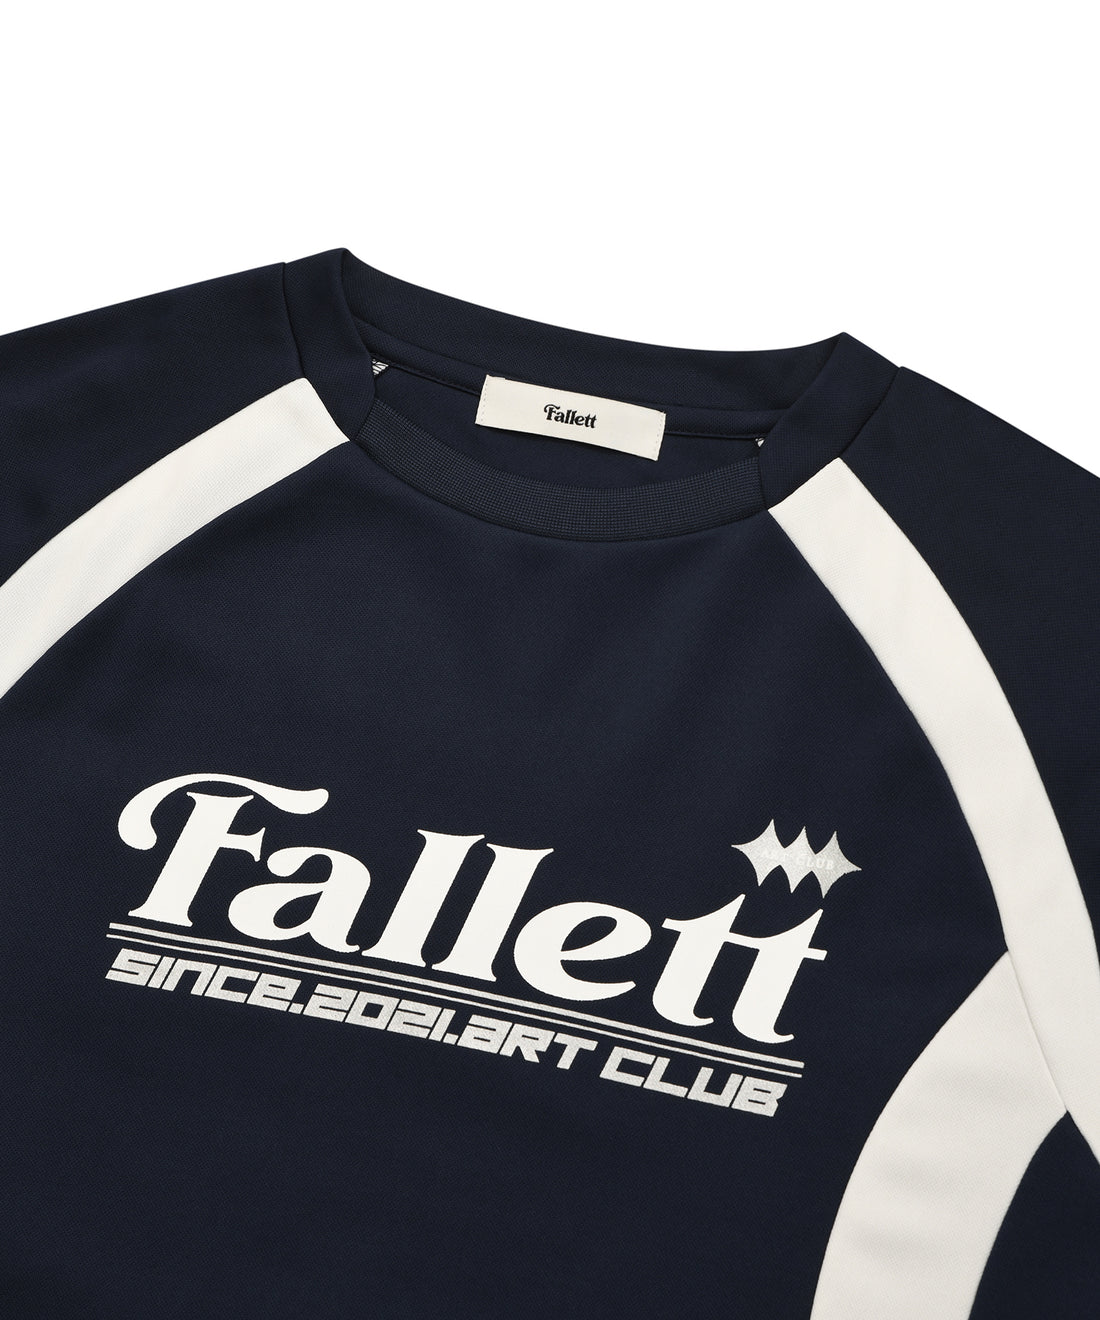 FALLETT Sports Club Football Jersey Long Sleeve Navy